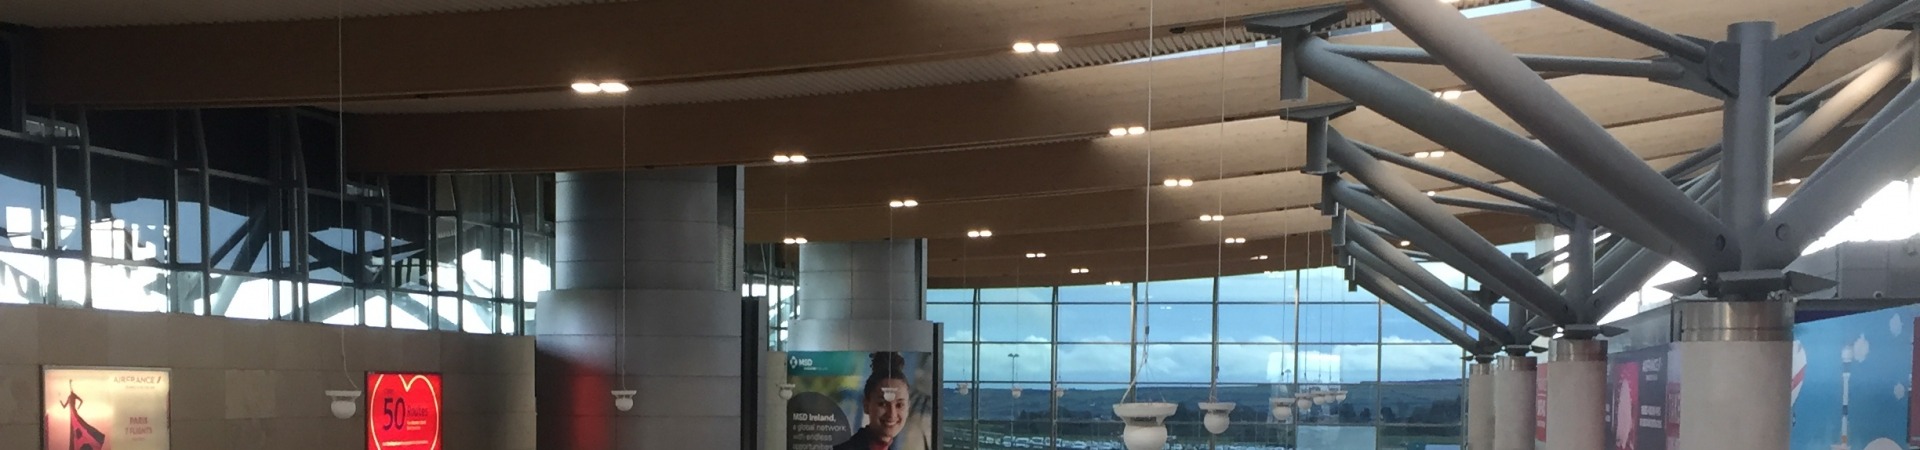 Tamlite Cork Airport County Cork Retail and Leisure Case Study header